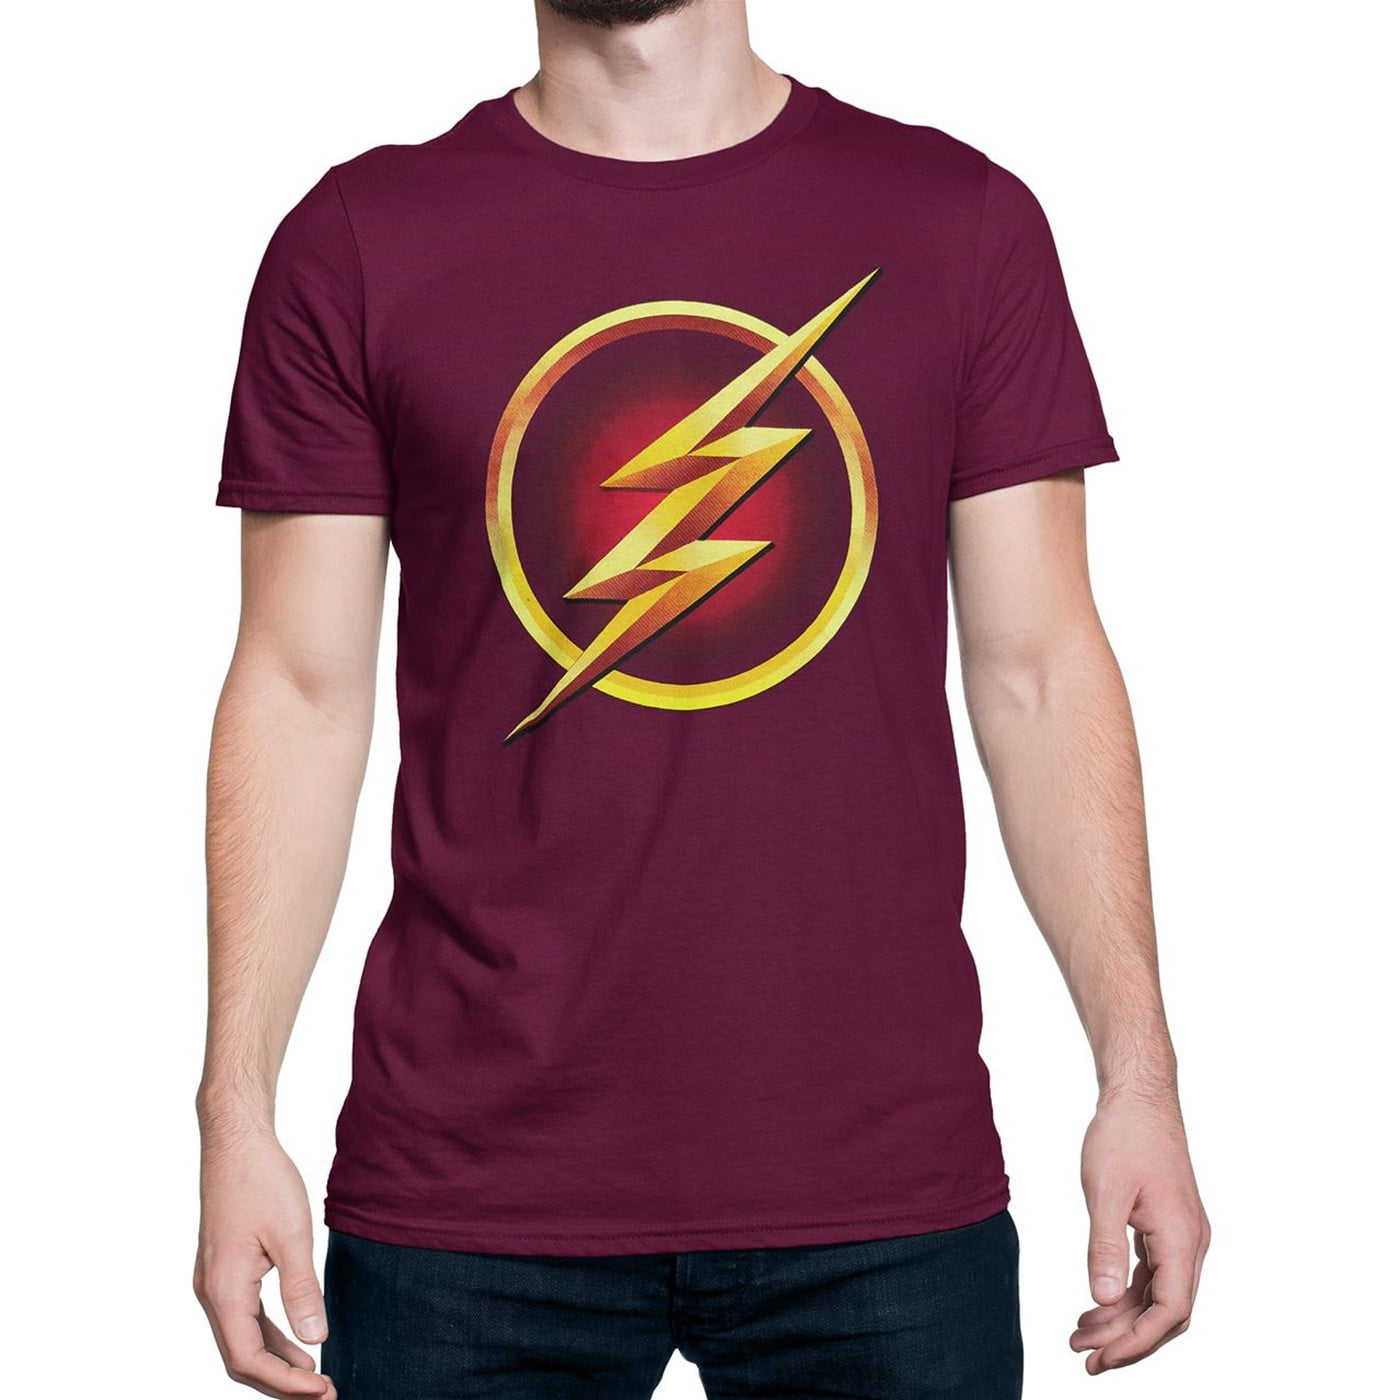 Flash shop. Star Labs футболка. Футболка с.эмблемой.Флэша. Одежда с символикой звезды.